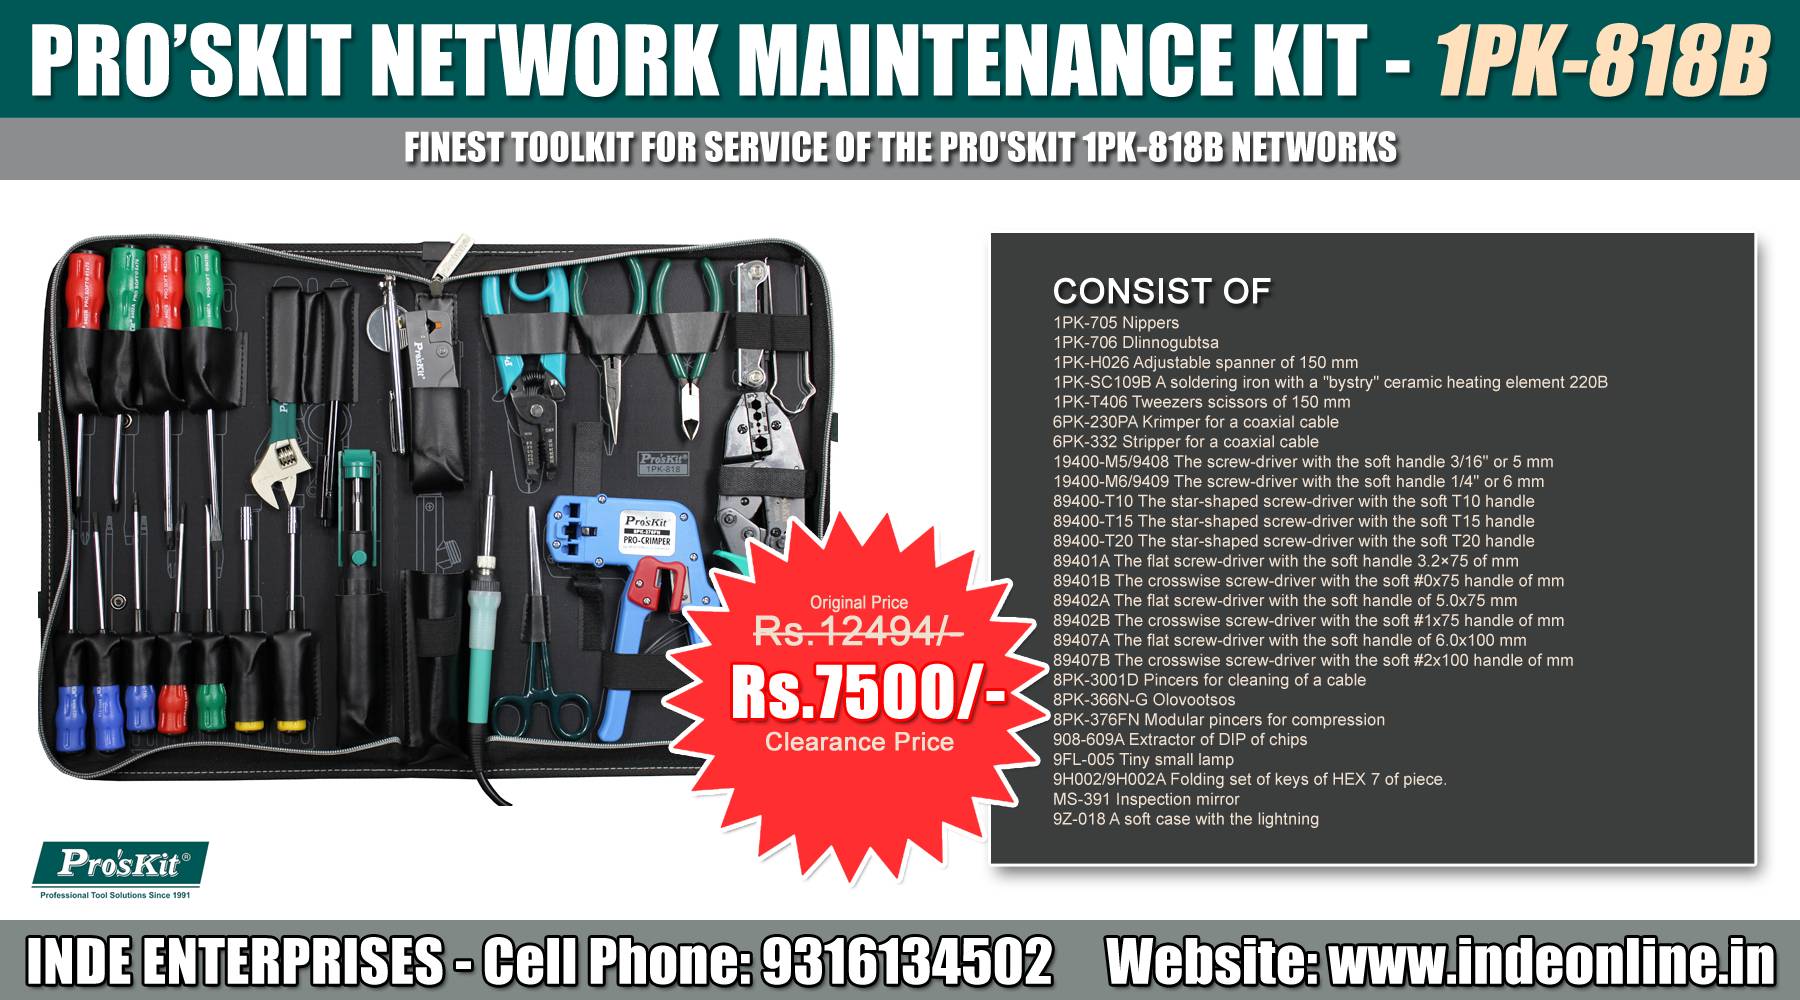 Proskit Network Maintence Kit Price Rs.7500/-